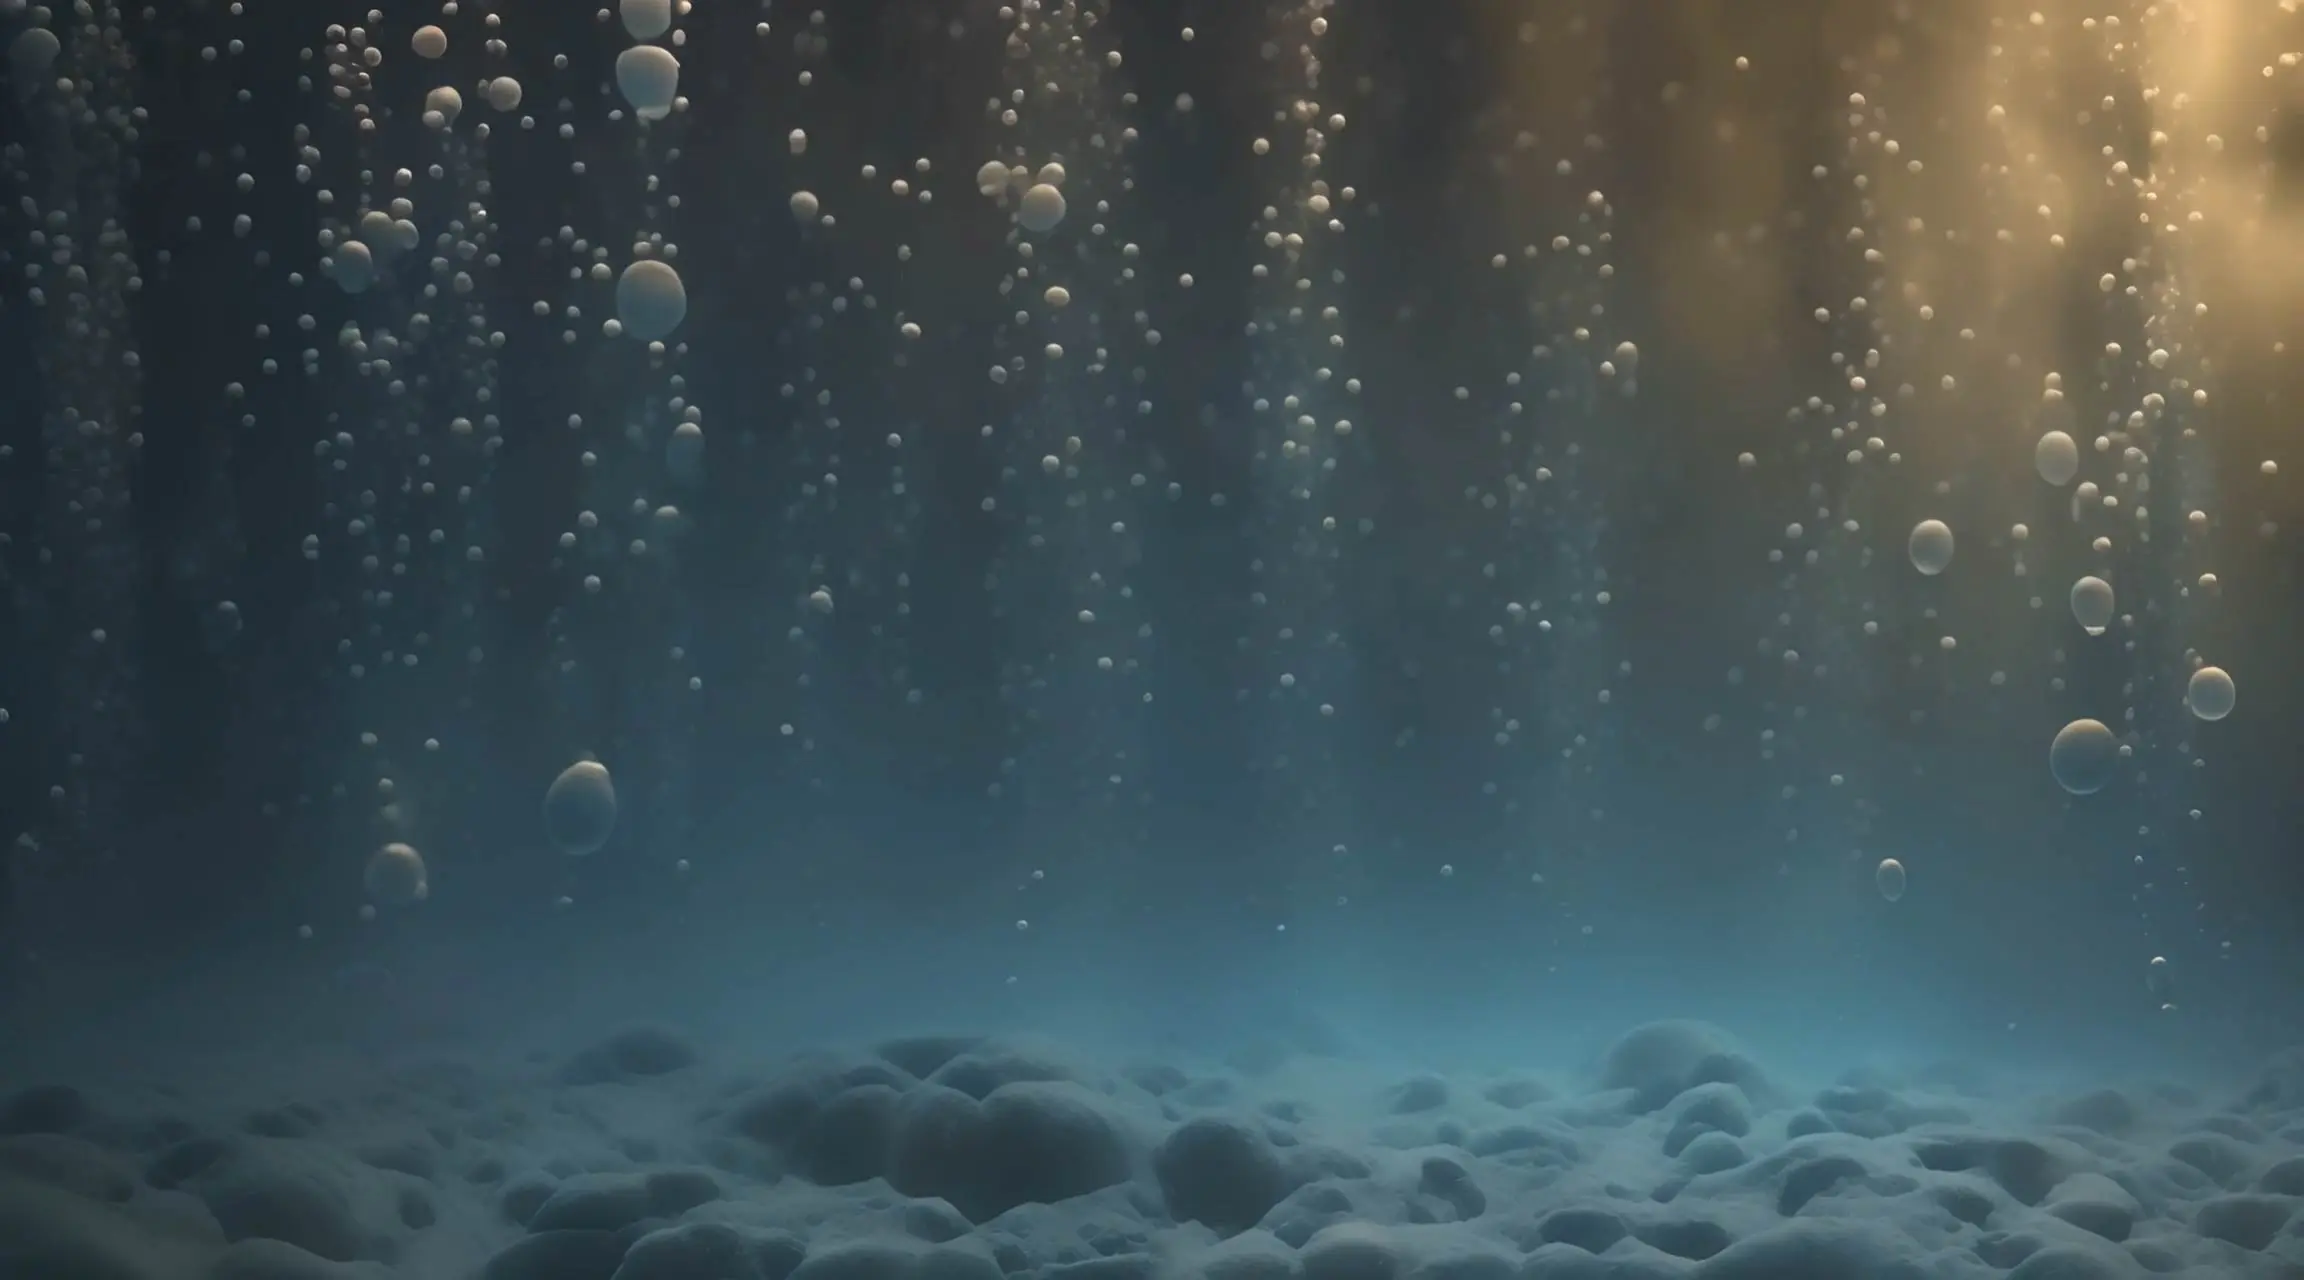 Bubbles underwater background